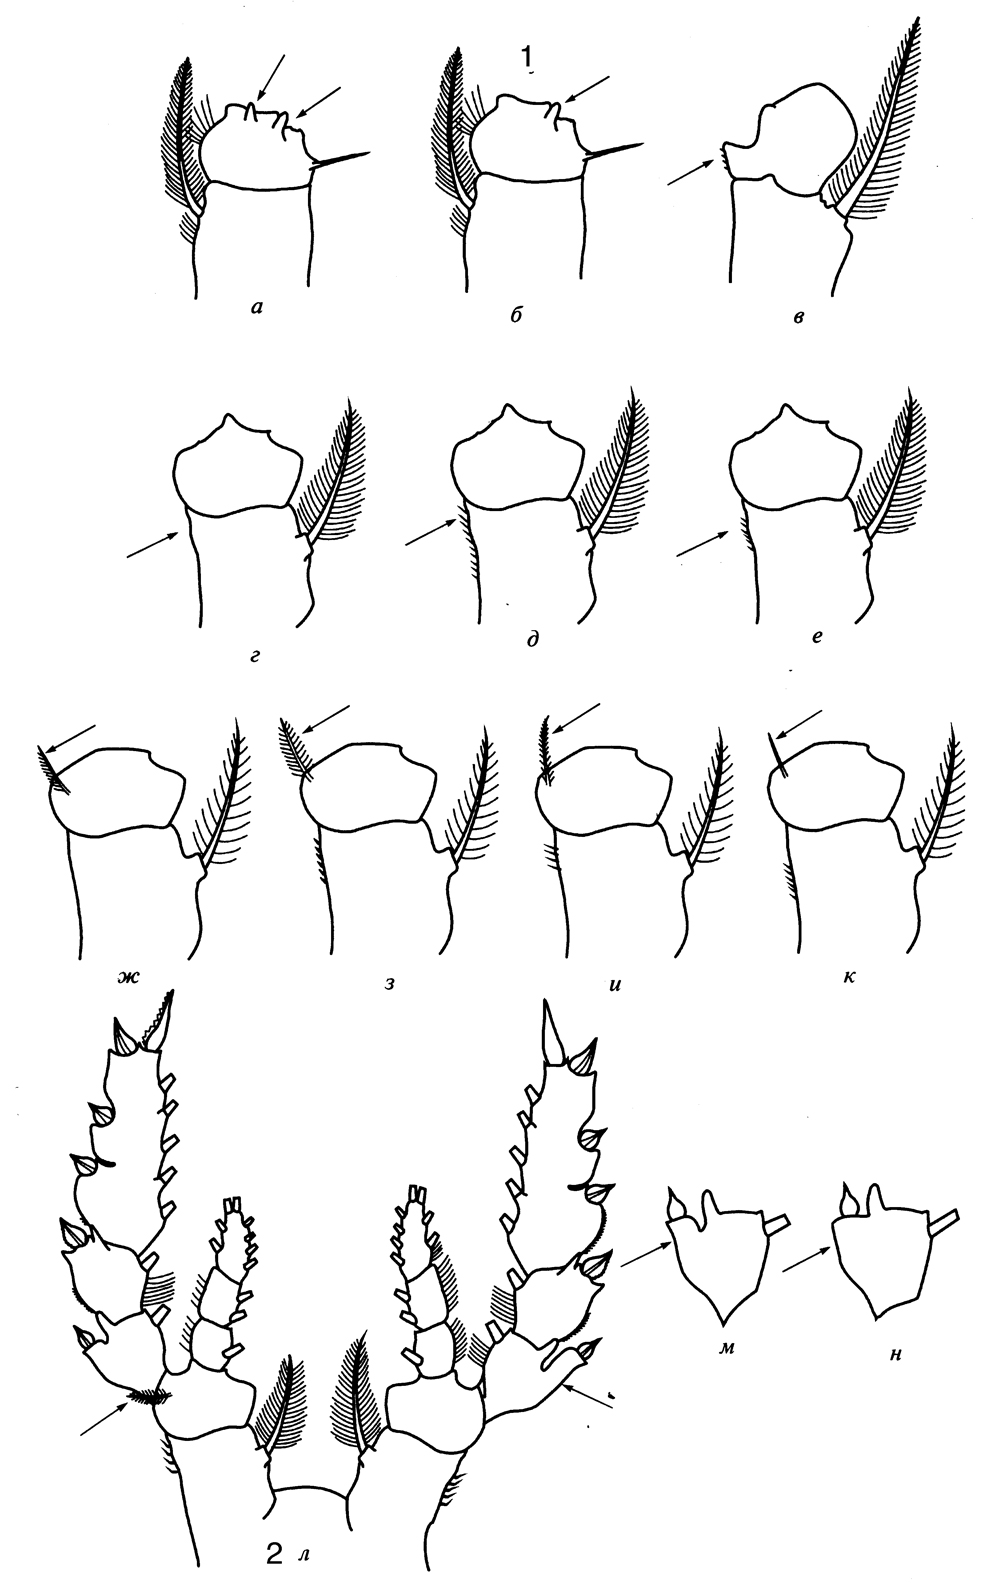 Species Pleuromamma scutullata - Plate 10 of morphological figures